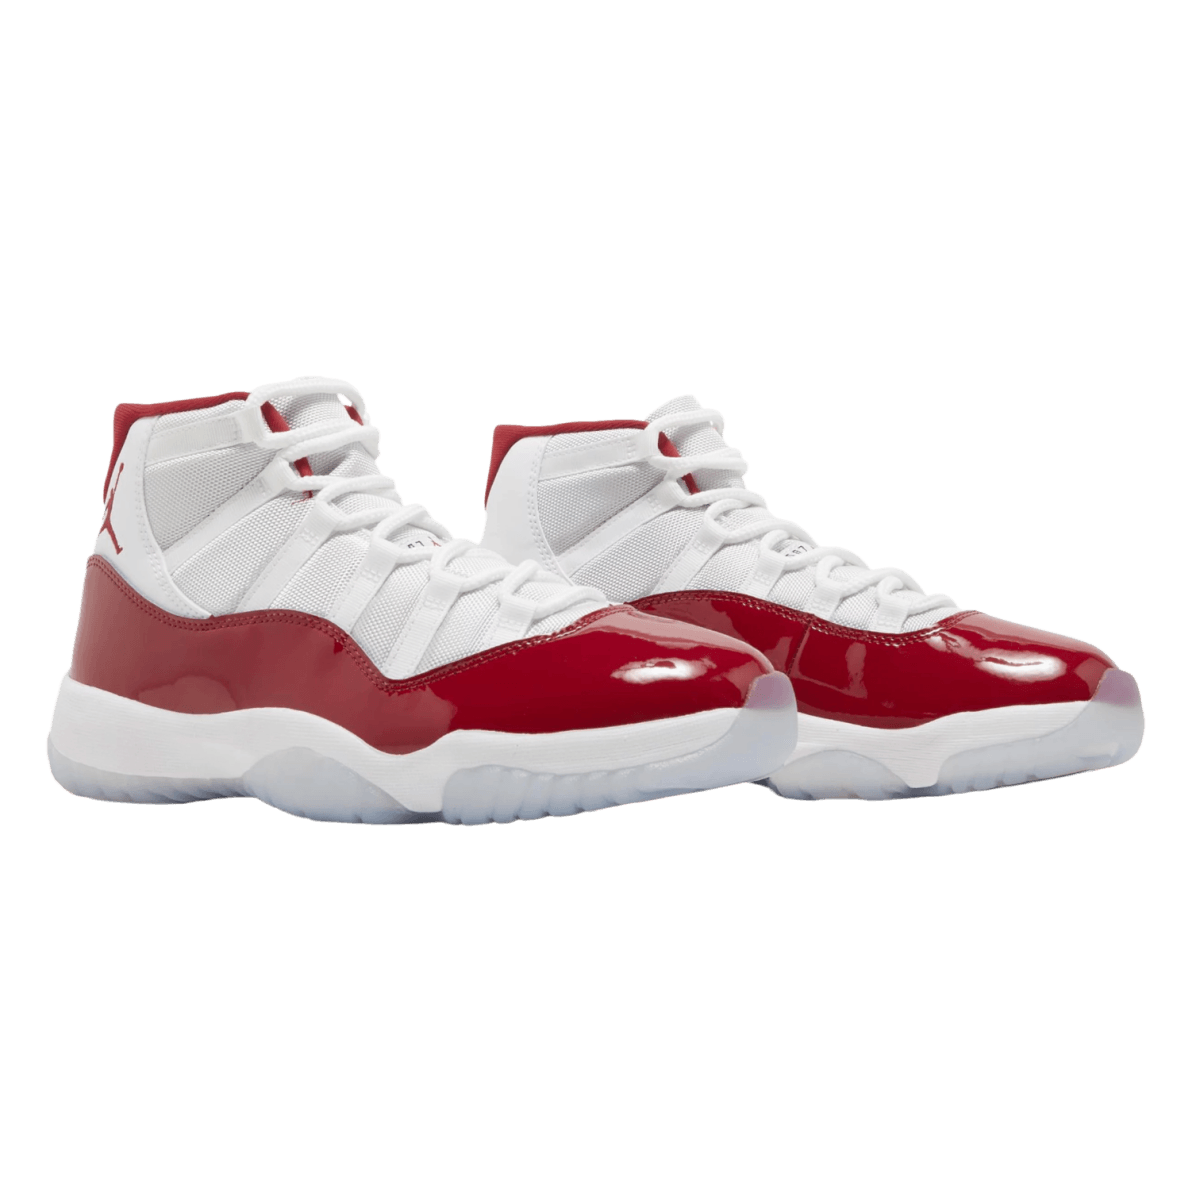 Air Jordan 11 Retro 'Cherry' - Toddler - High Sneaker - Jawns on Fire Sneakers & Streetwear